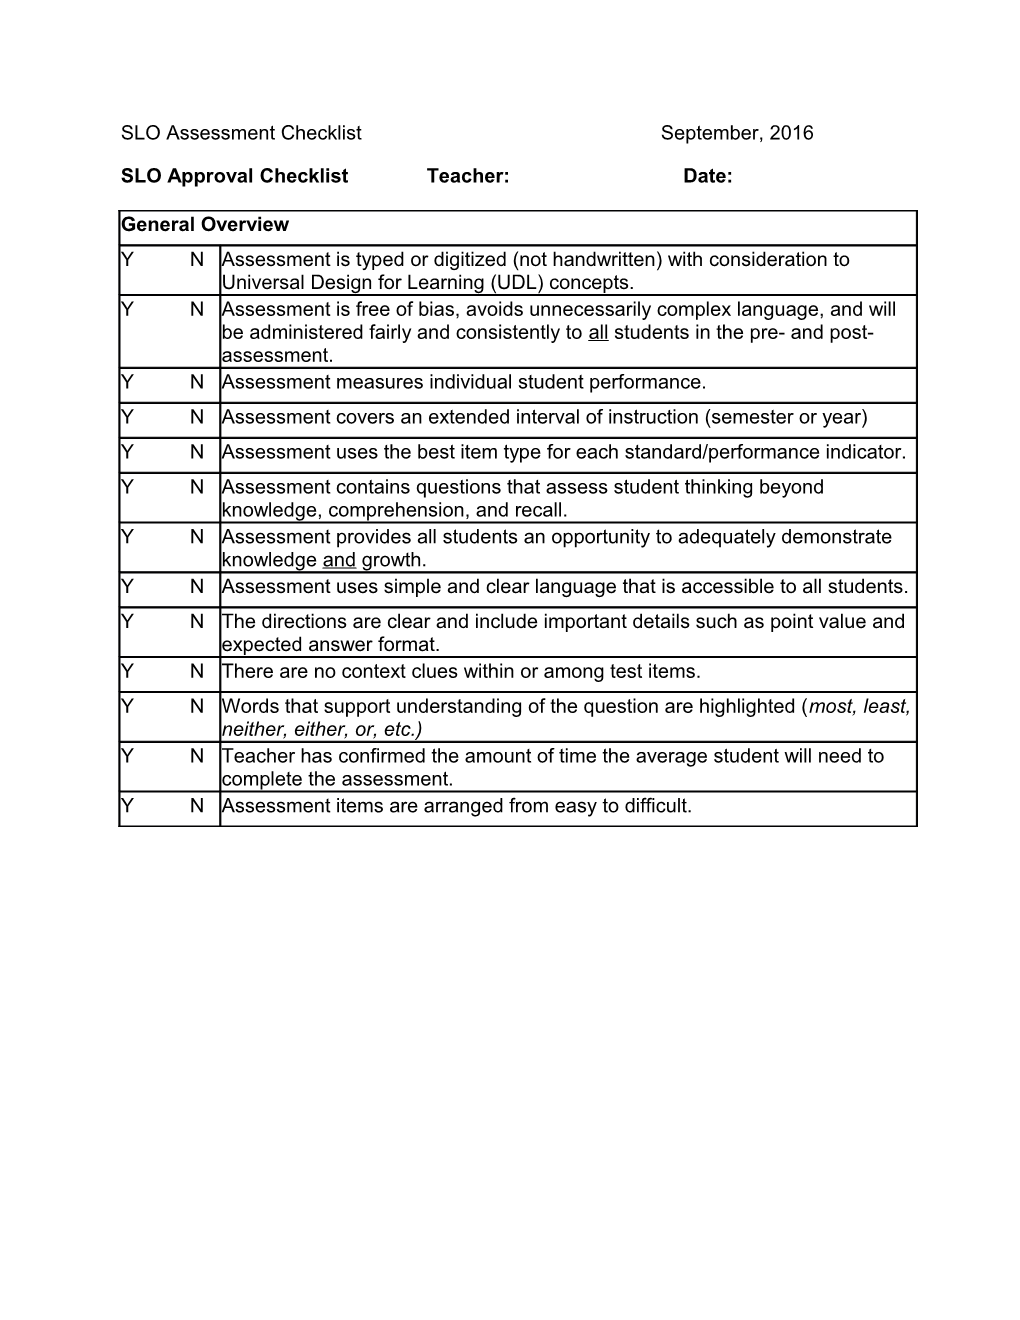 SLO Approval Checklist Teacher: Date